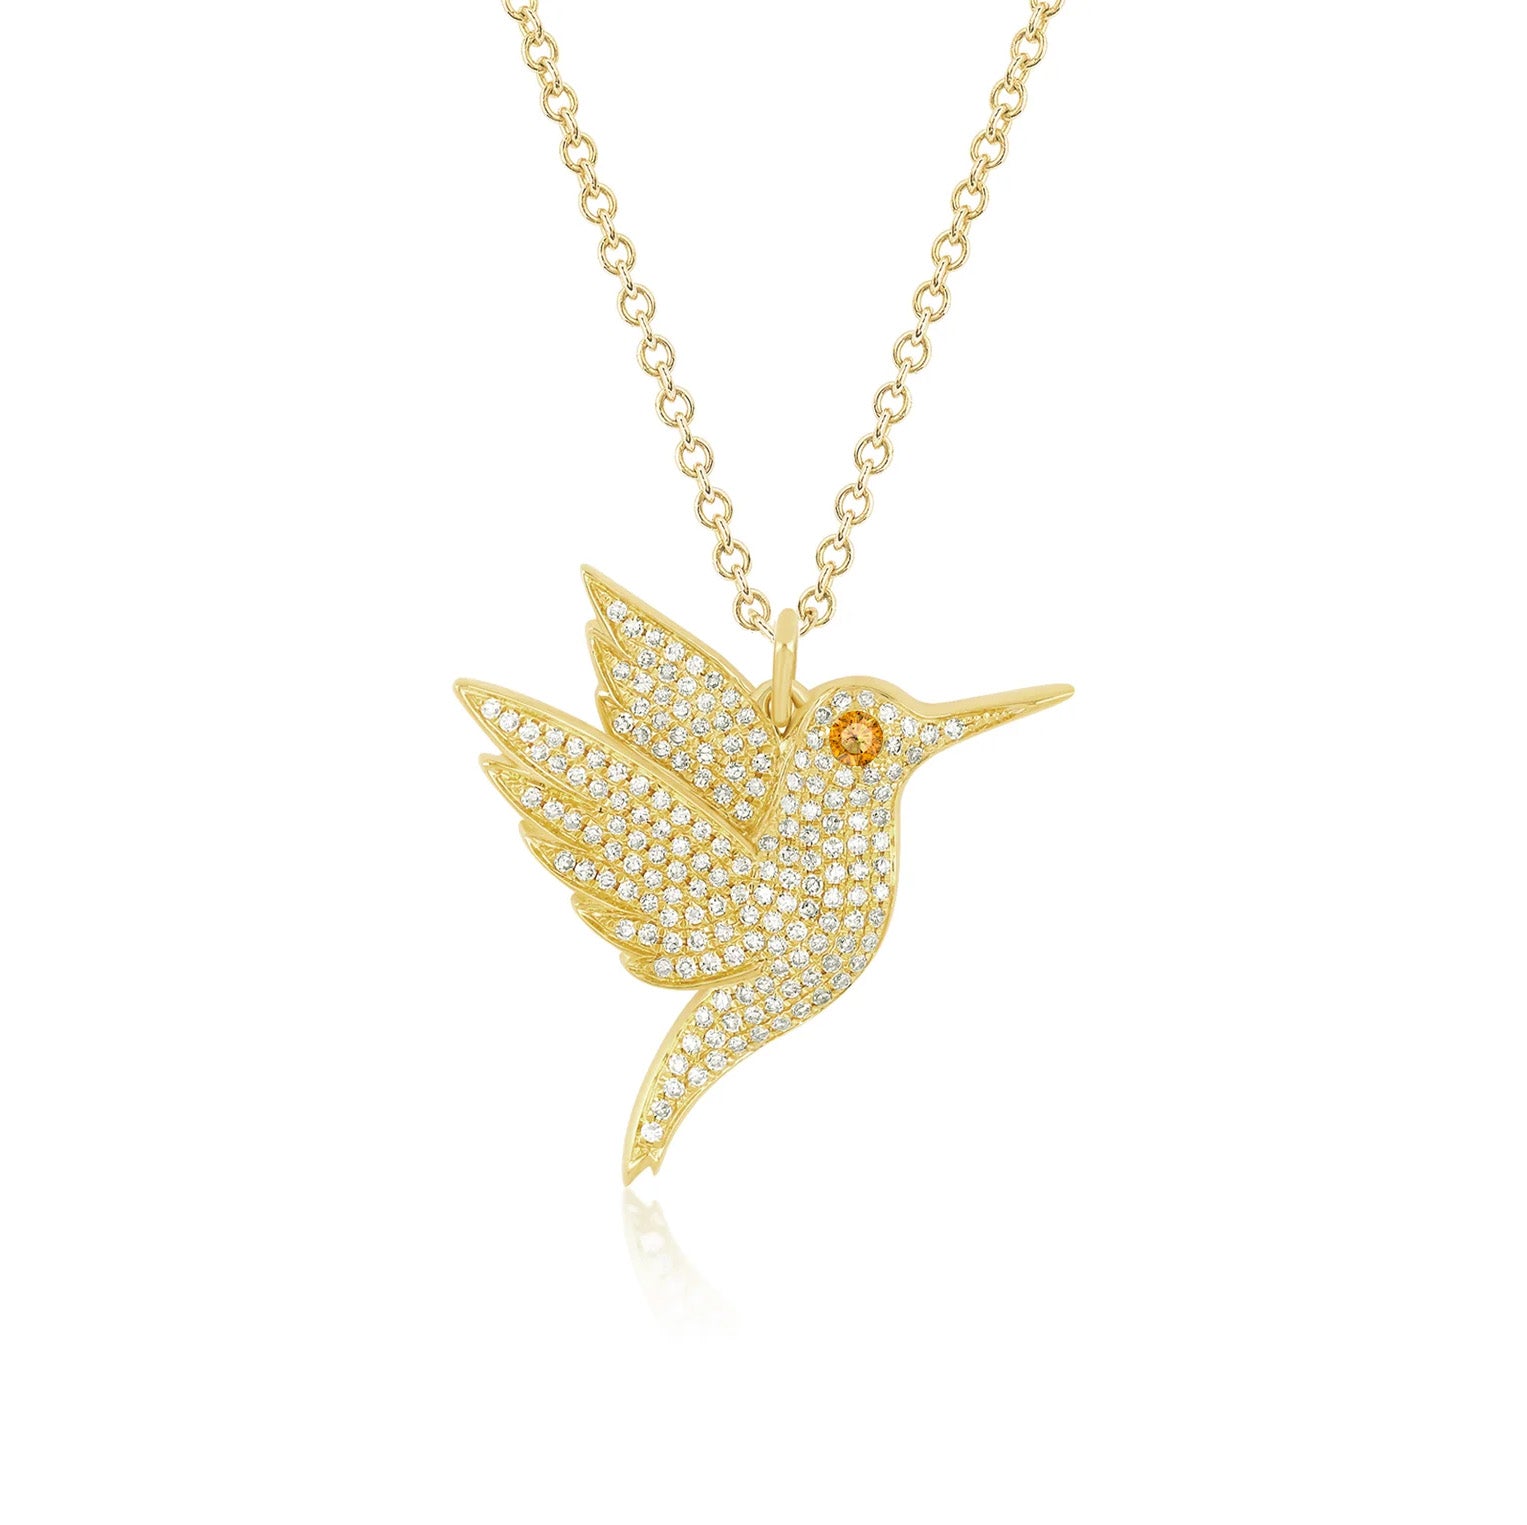 Pavé Diamond Hummingbird Necklace in 14k yellow gold with citrine birthstone eye